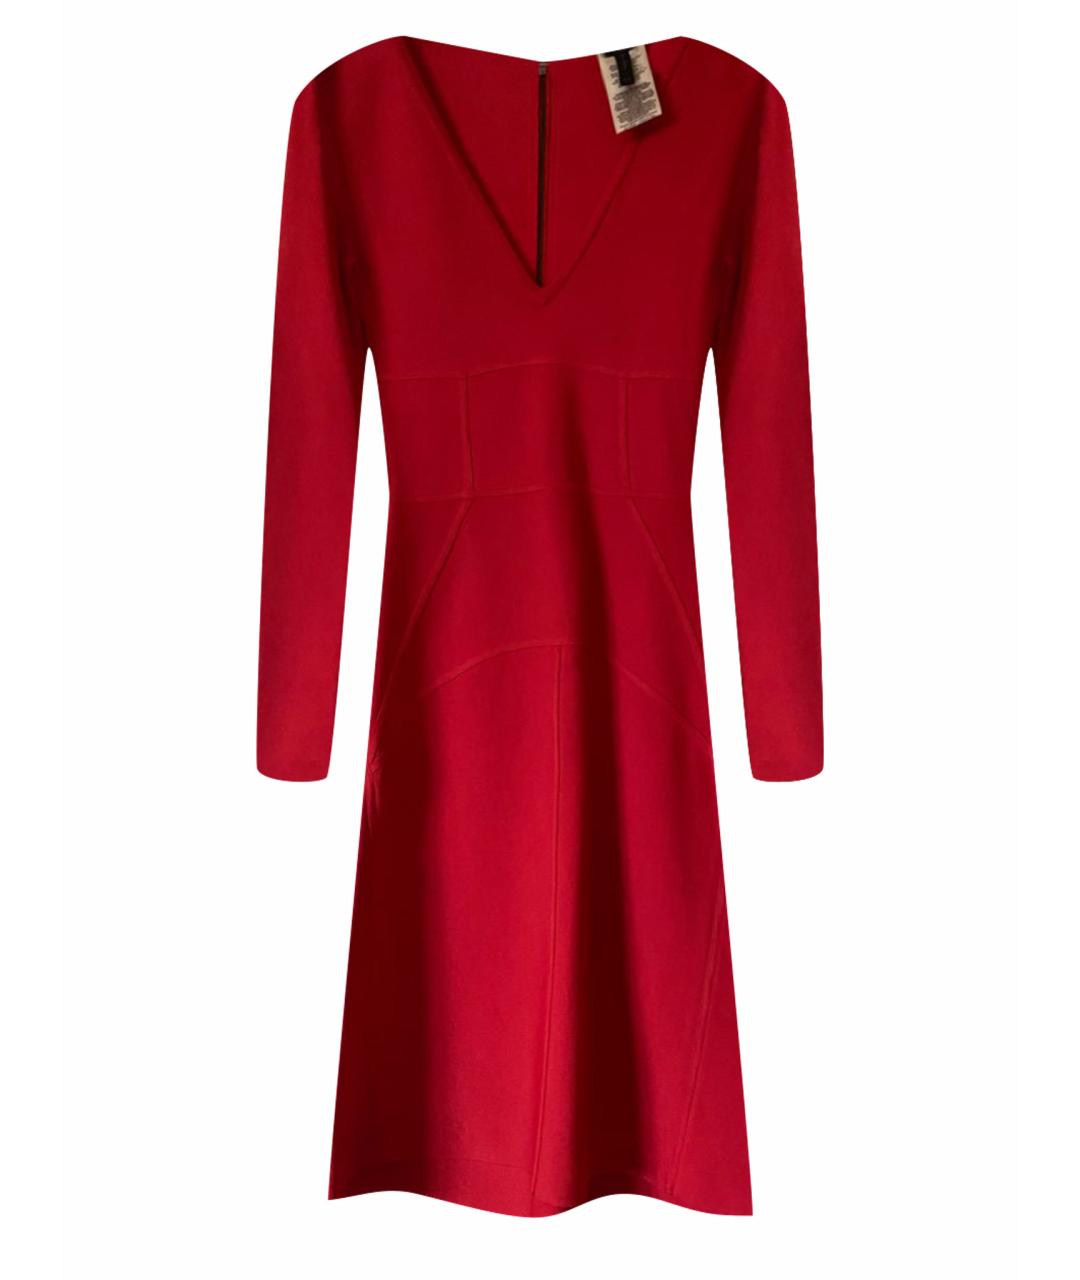 BCBG MAXAZRIA Красное коктейльное платье, фото 1